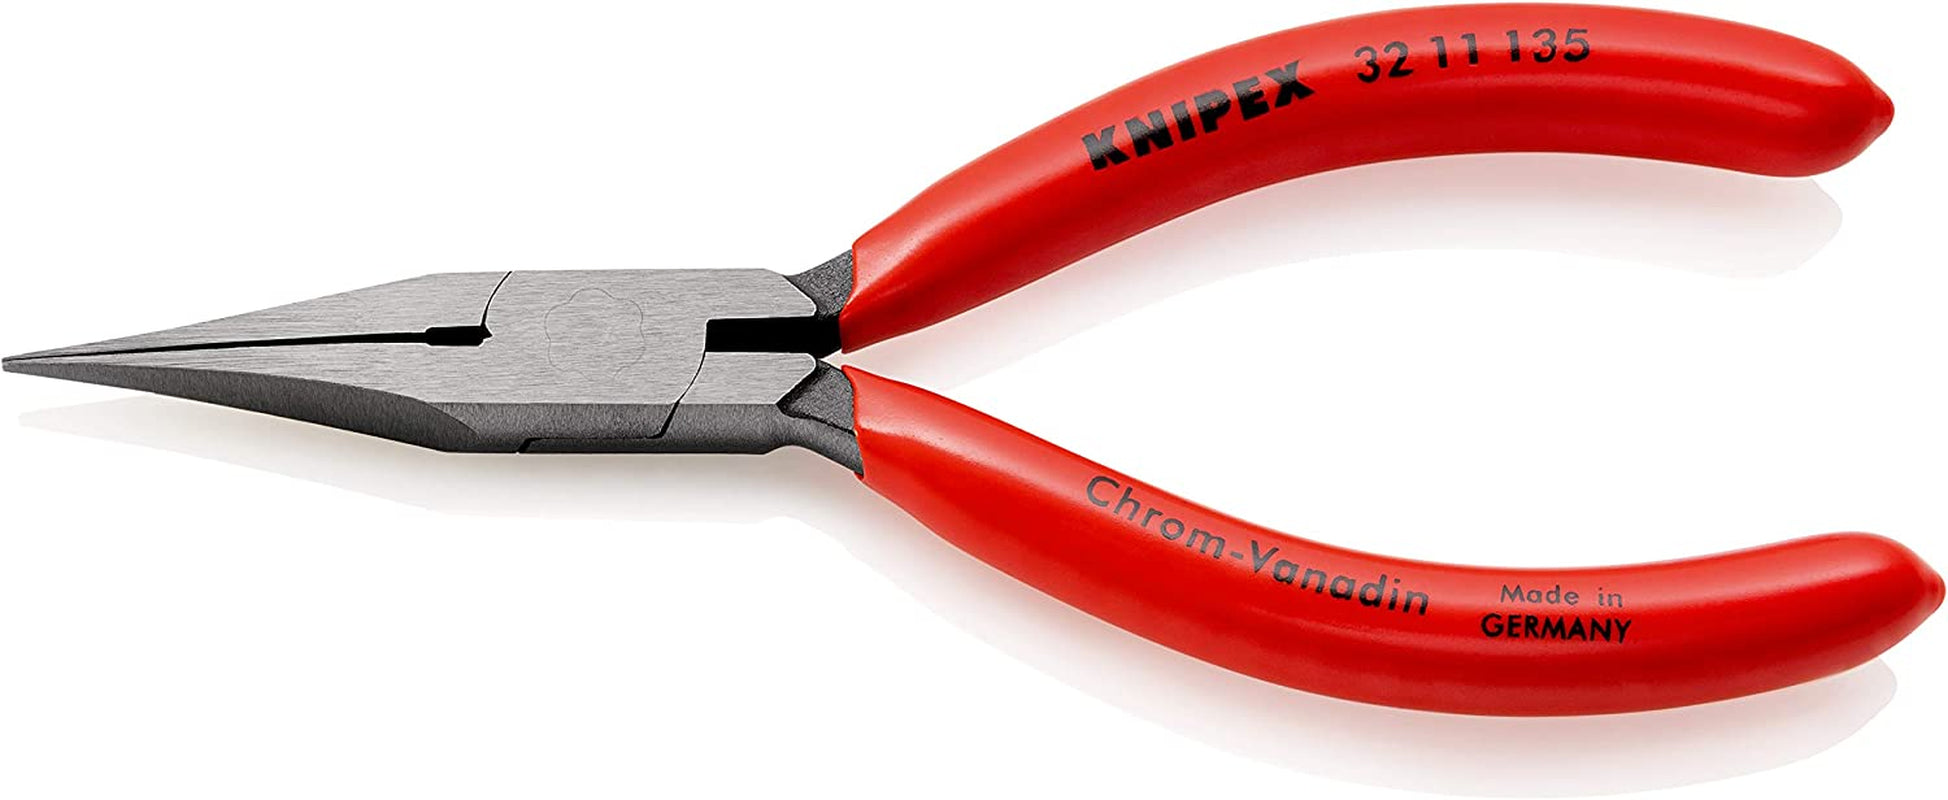 KNIPEX, Knipex 32 11 135 Relay Adjusting Pliers Black Atramentized Plastic Coated, 135 Mm